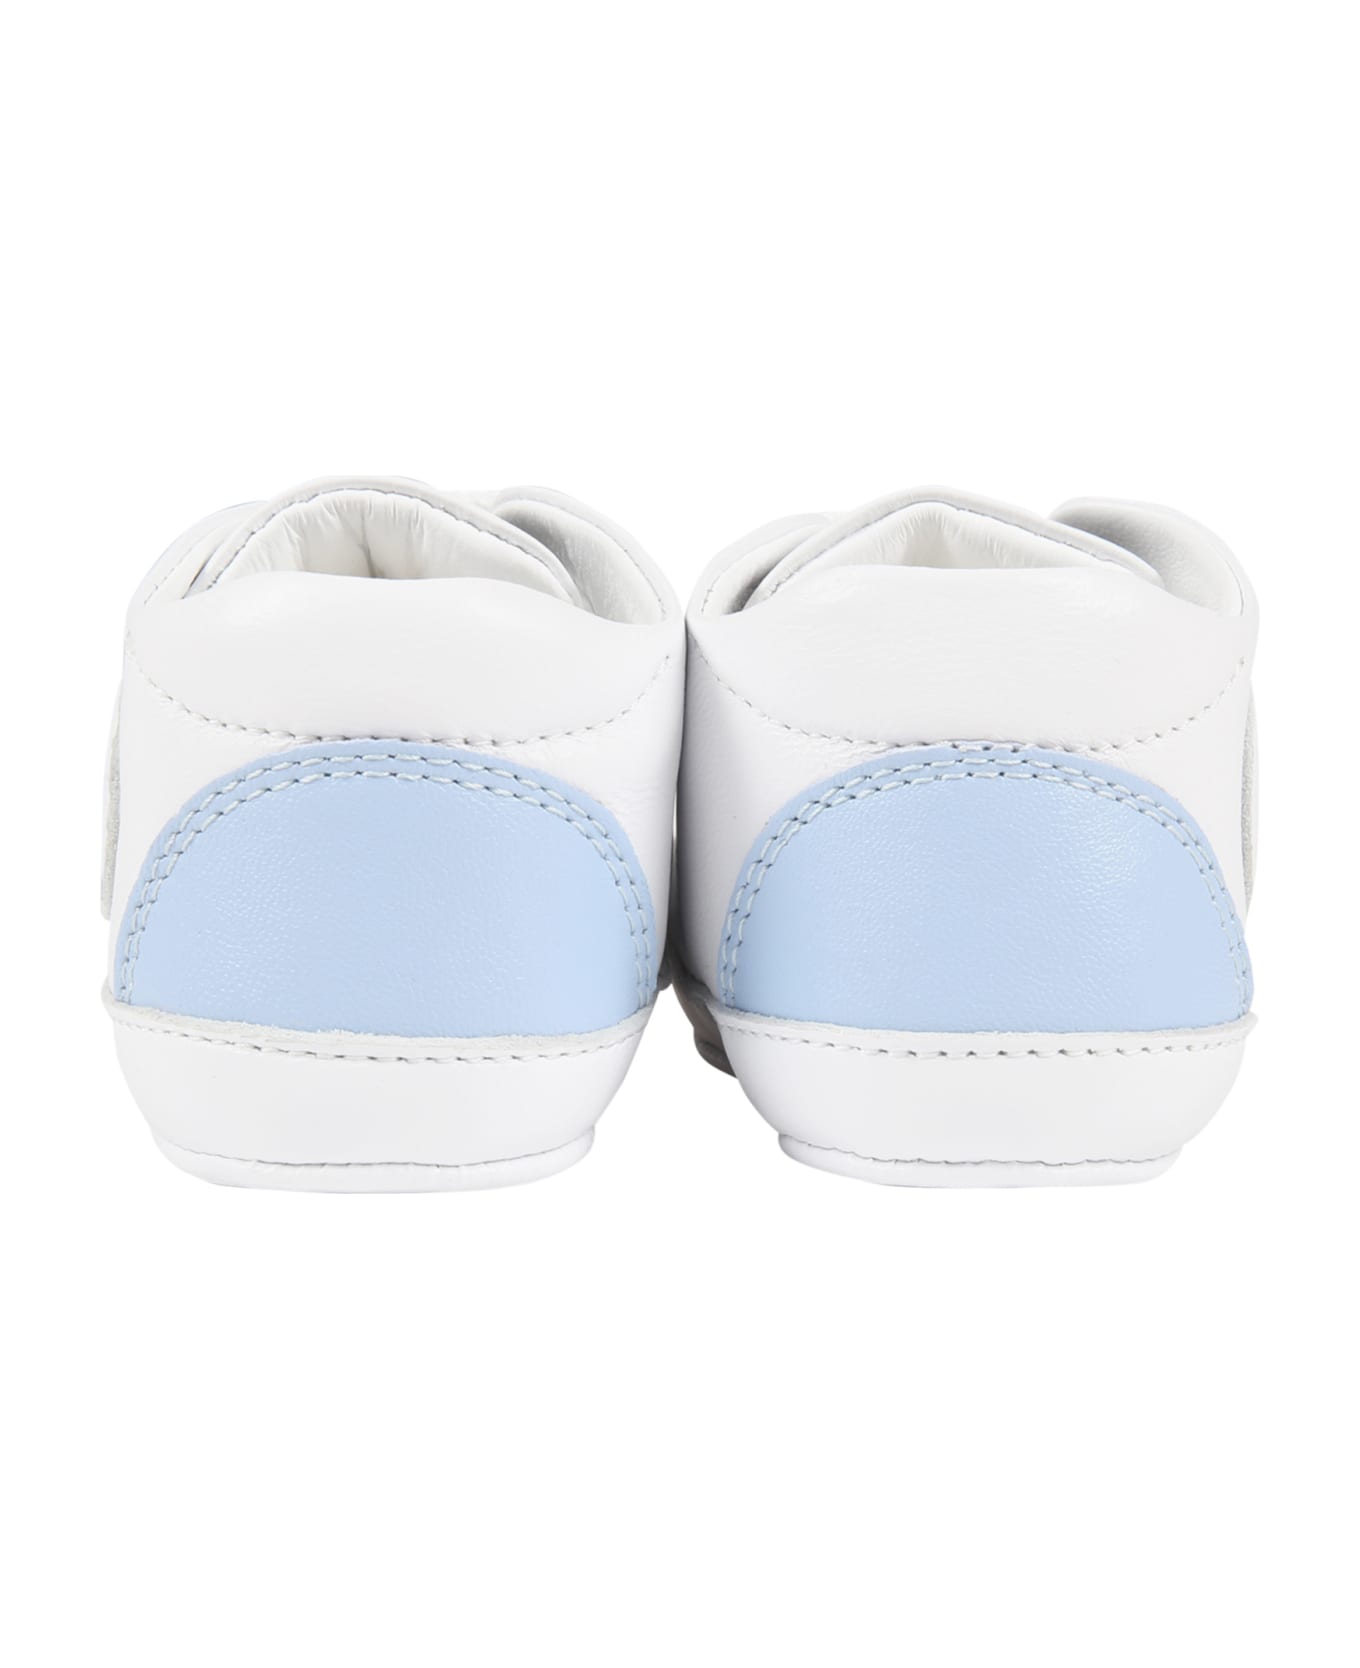 Balmain White Shoes For Baby Boy With Logo - White